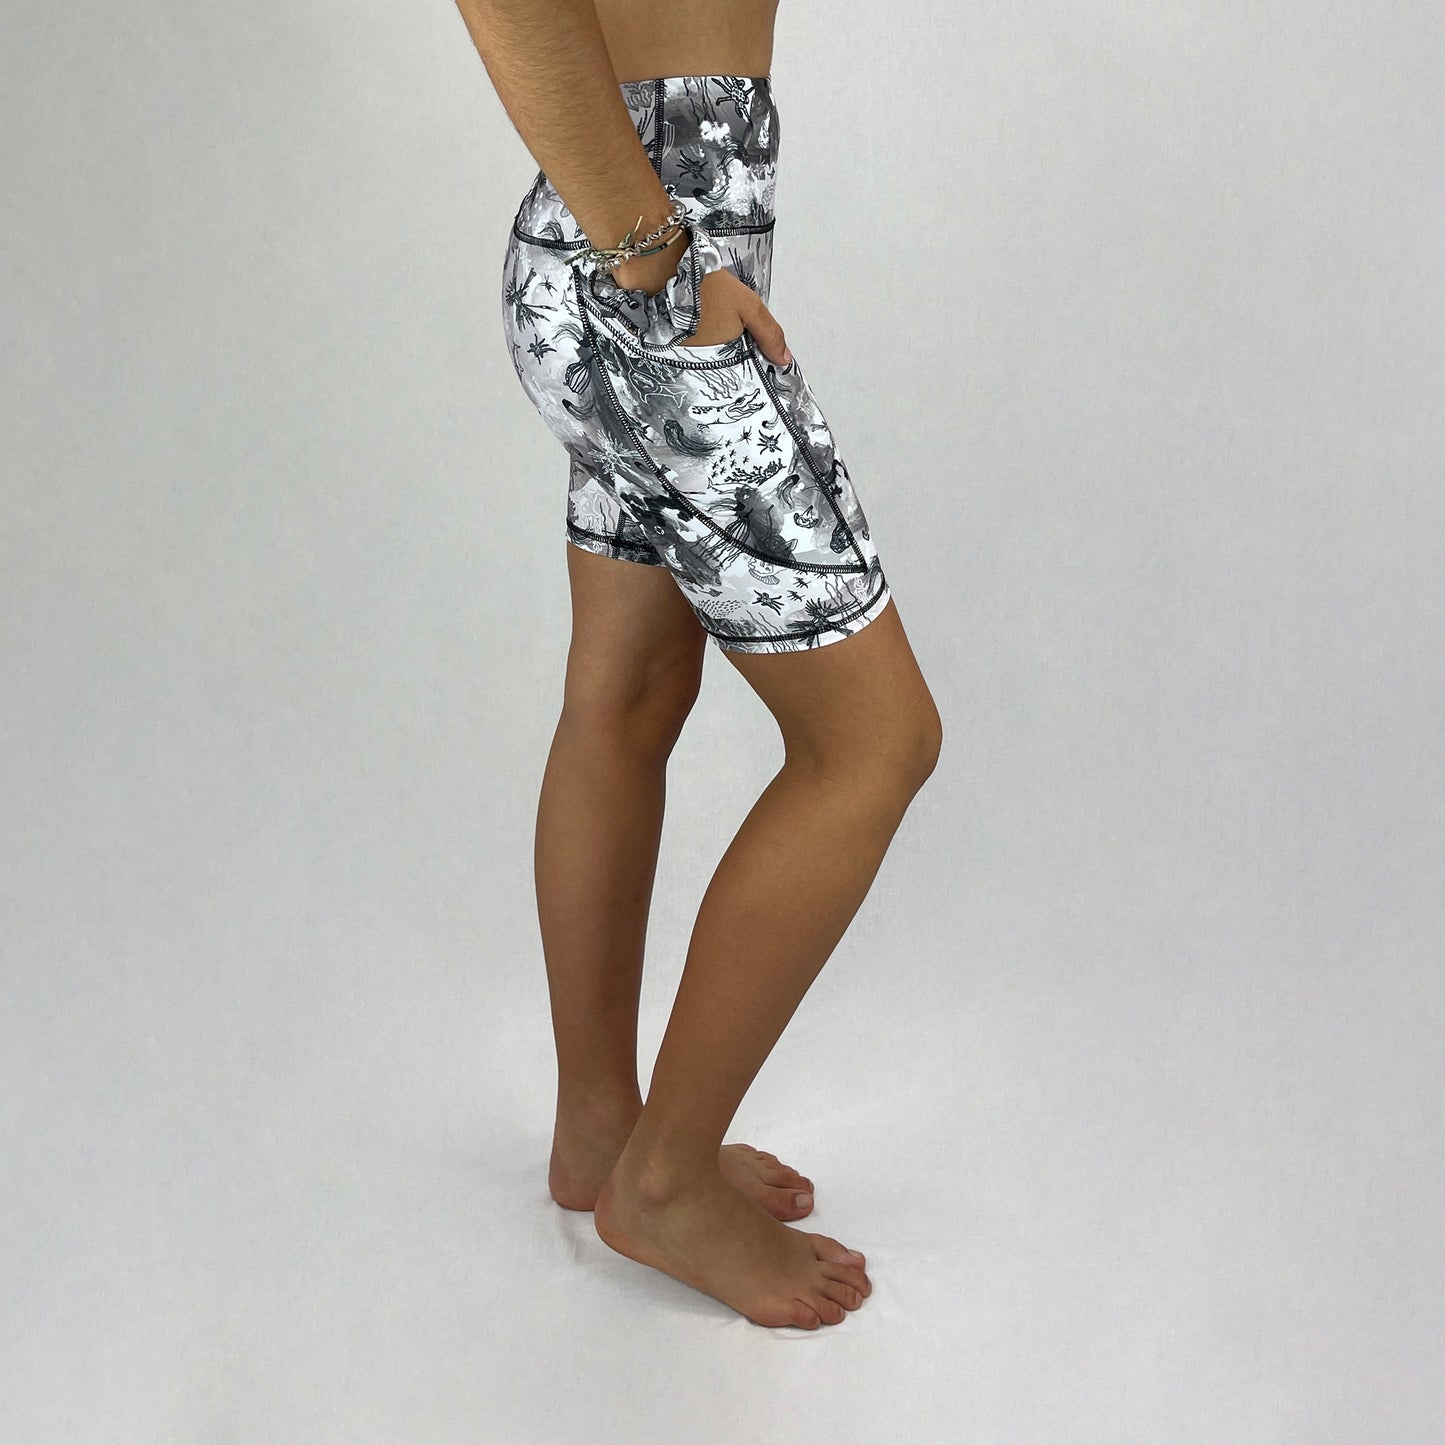 trendy bike shorts in recycled fabric made in australia - Killer - side pocket